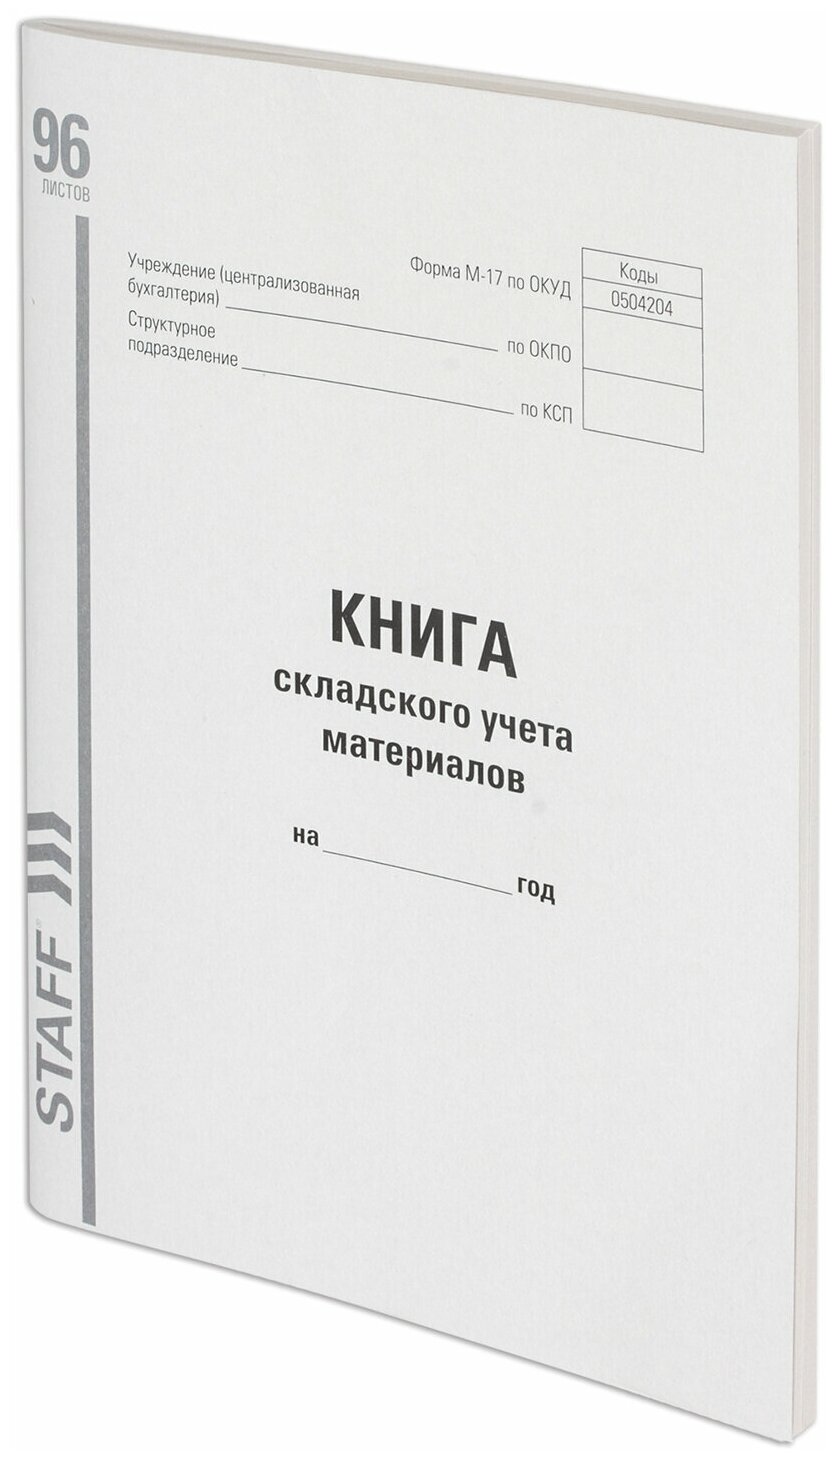 Книга складского учета материалов форма М-17, 96 л, картон, типографский блок, А4 (200х290 мм), STAFF, 130242 - 1 шт.